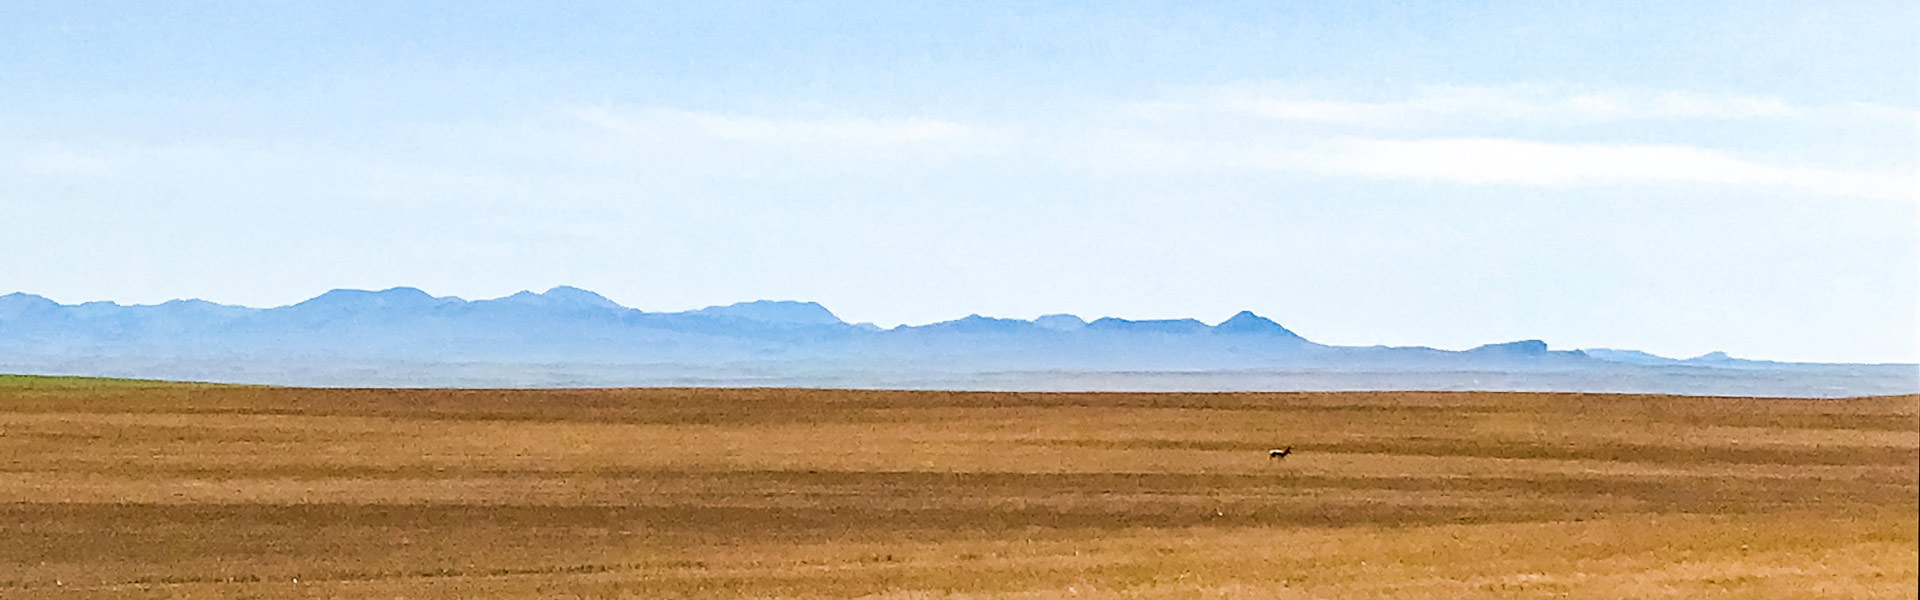 Beautiful Montana landscape with lone deer